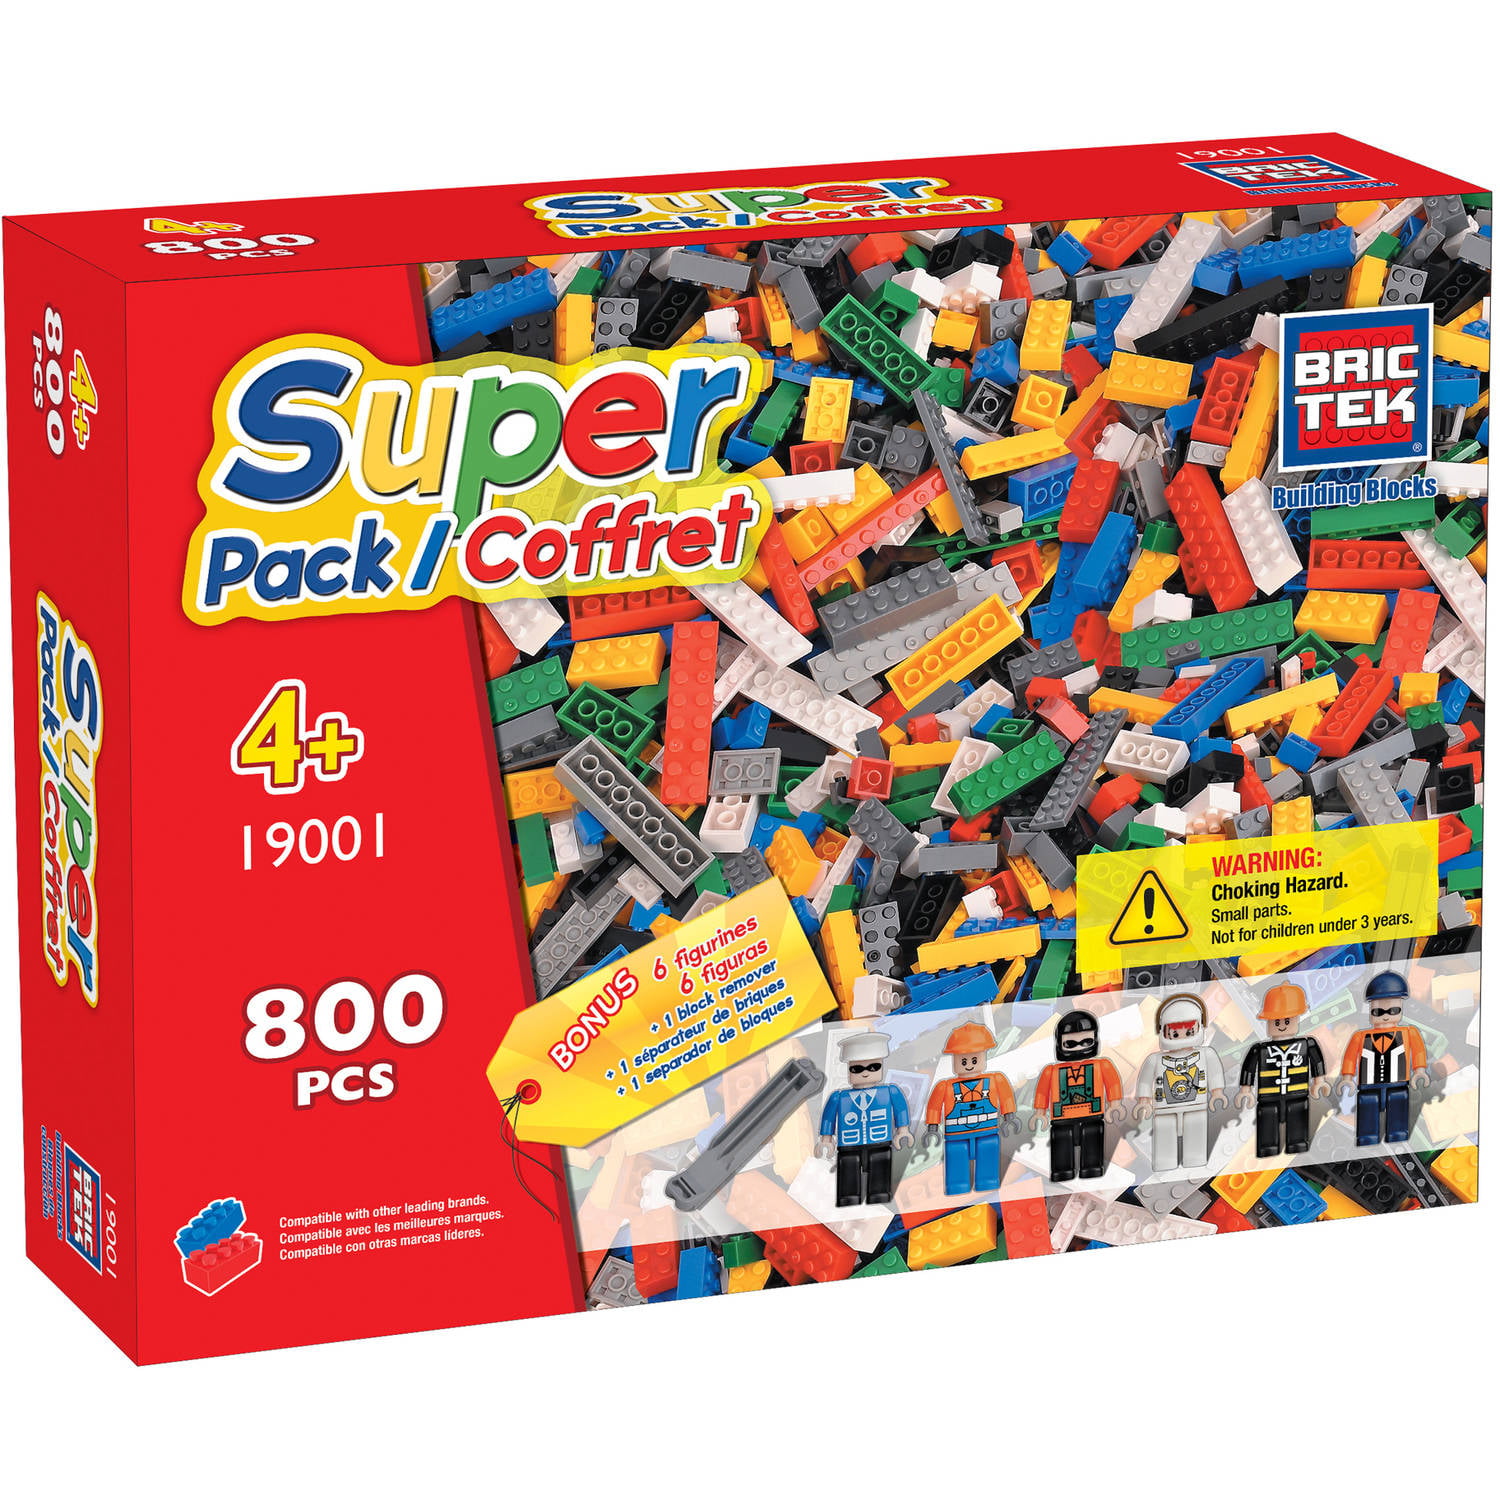 BRICTEK 1,000-Pc Super Pack Building Bricks Set Compatible with Other Leading Brands.